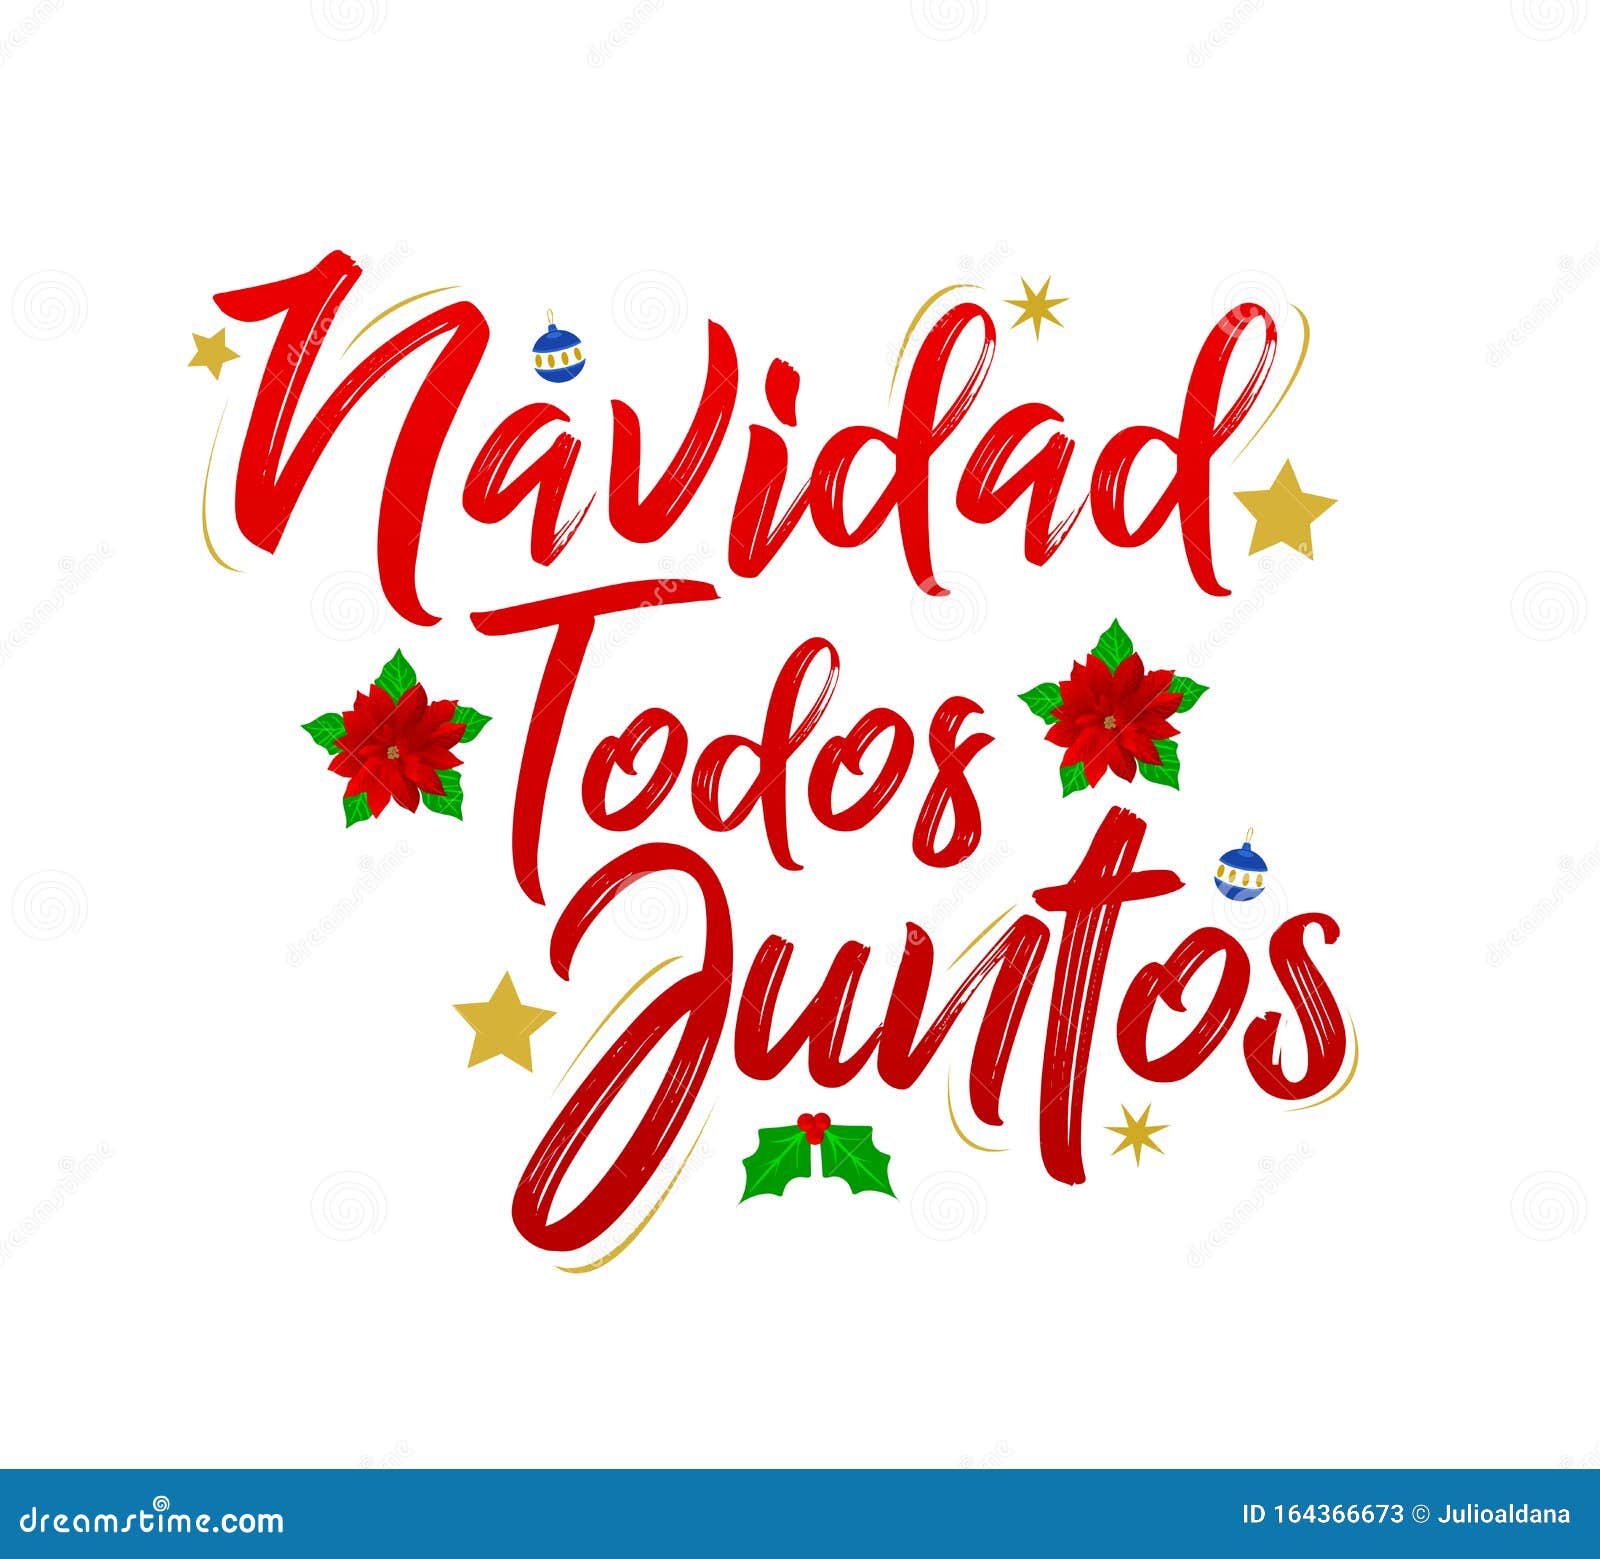 navidad todos juntos, christmas all together, spanish text lettering 